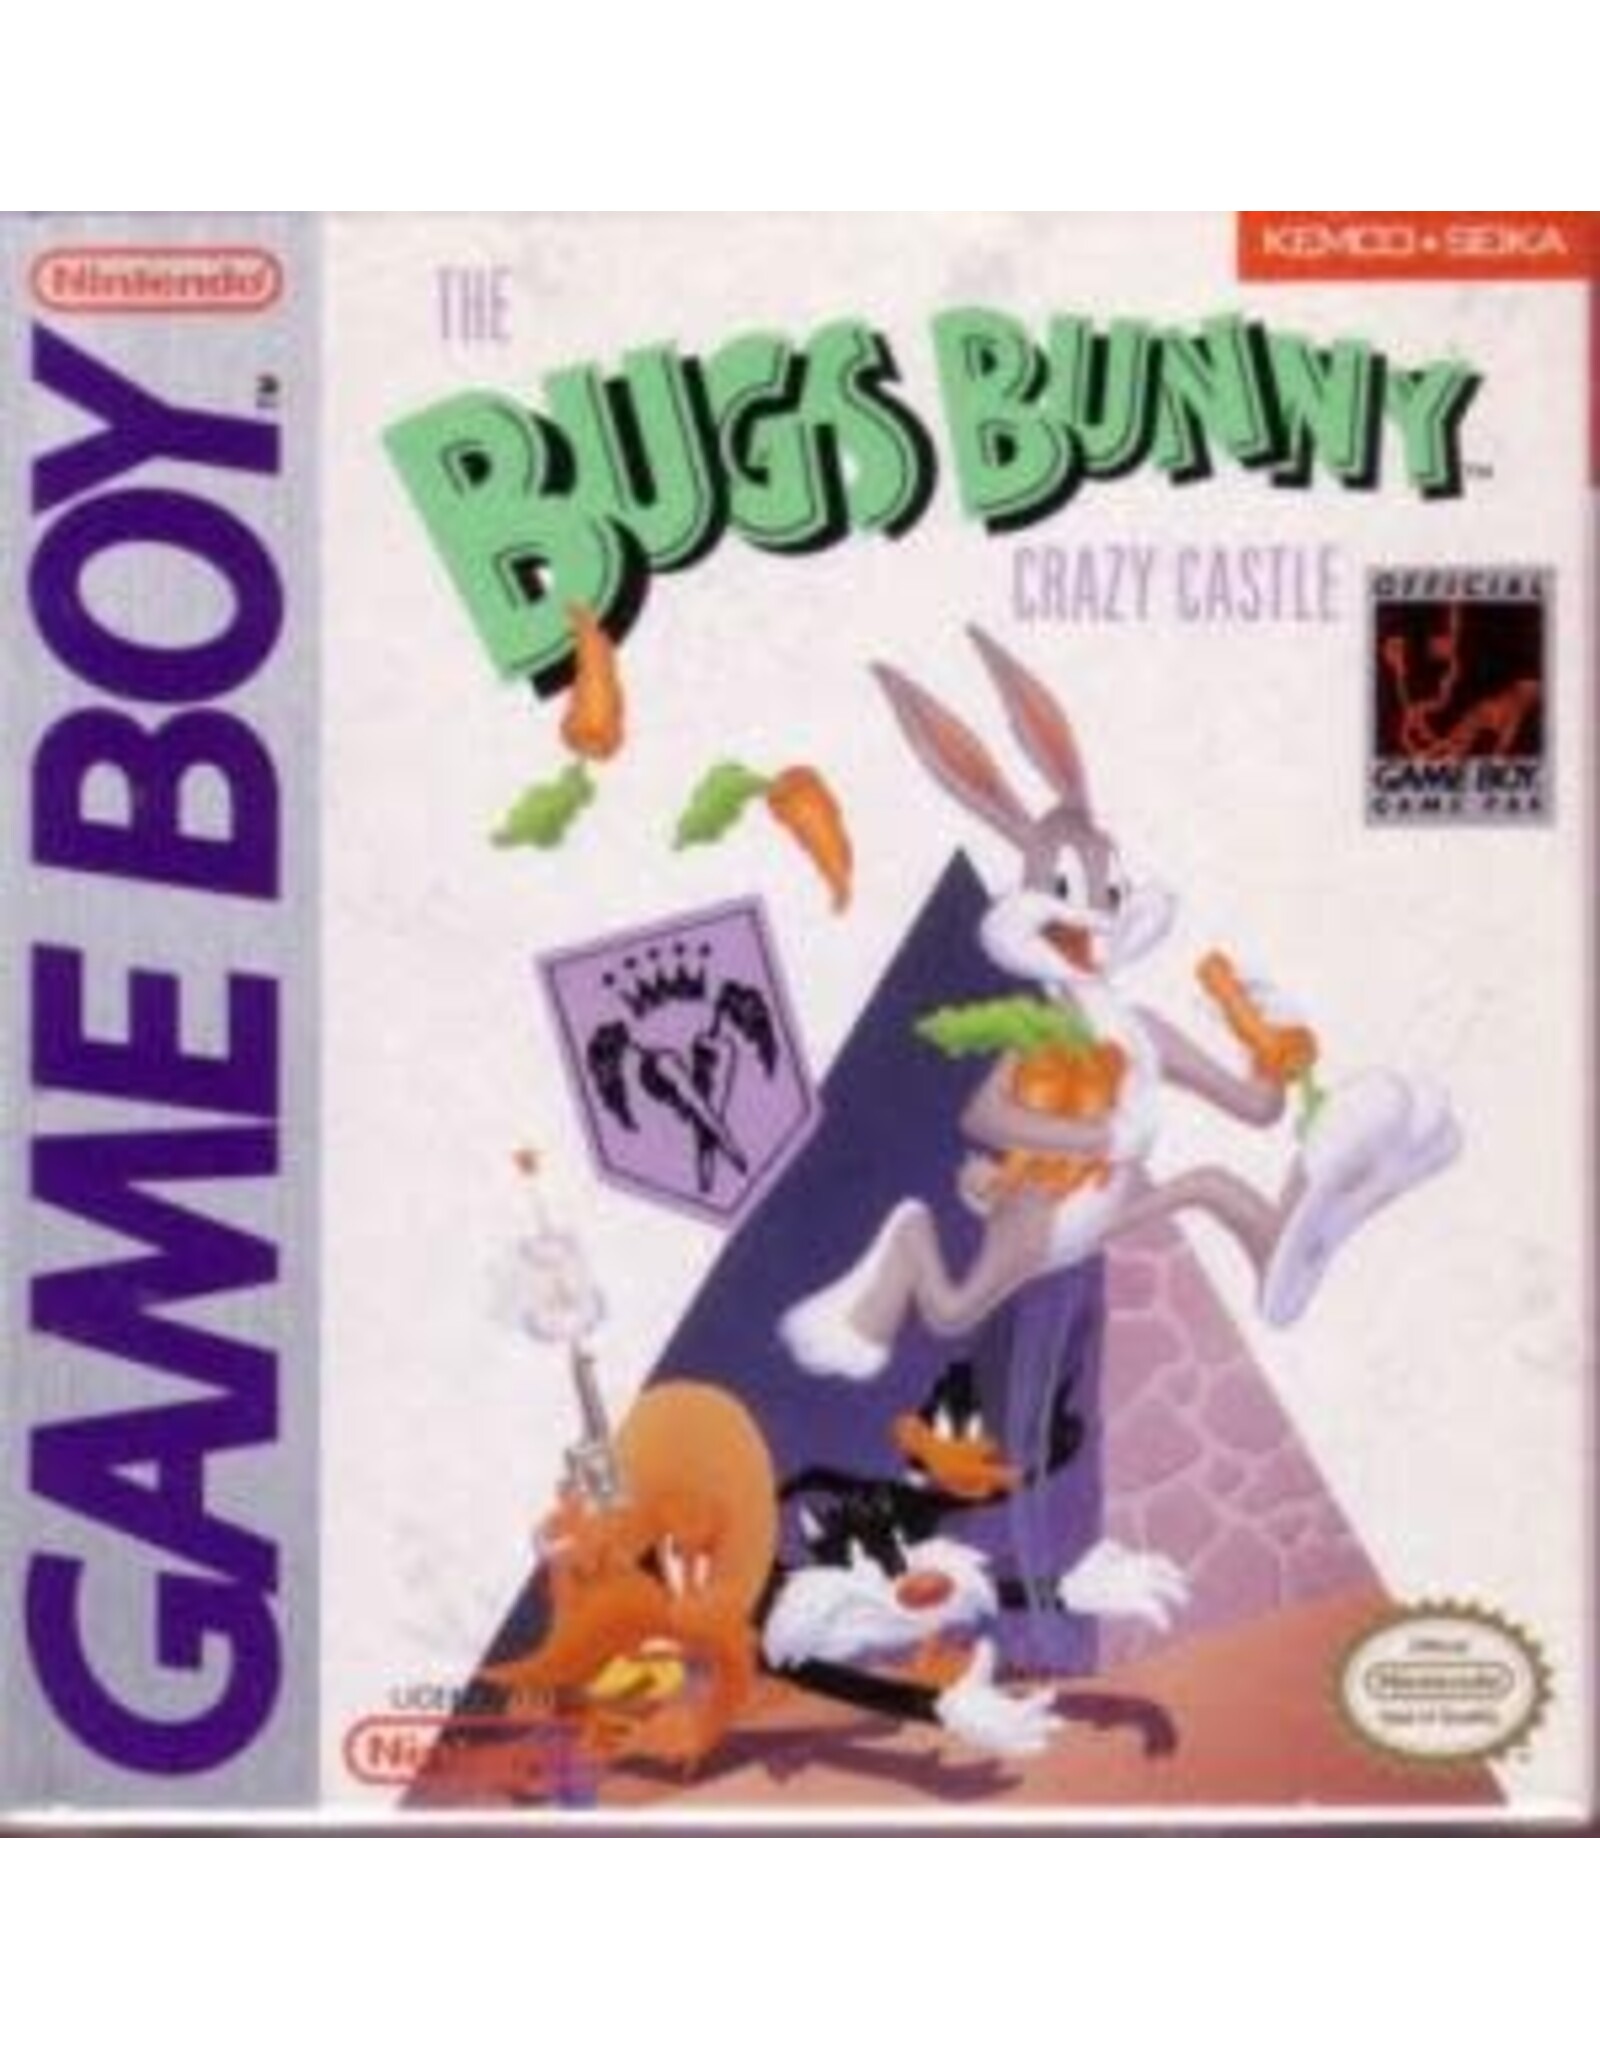 Game Boy Bugs Bunny Crazy Castle (CiB, Damaged Box)